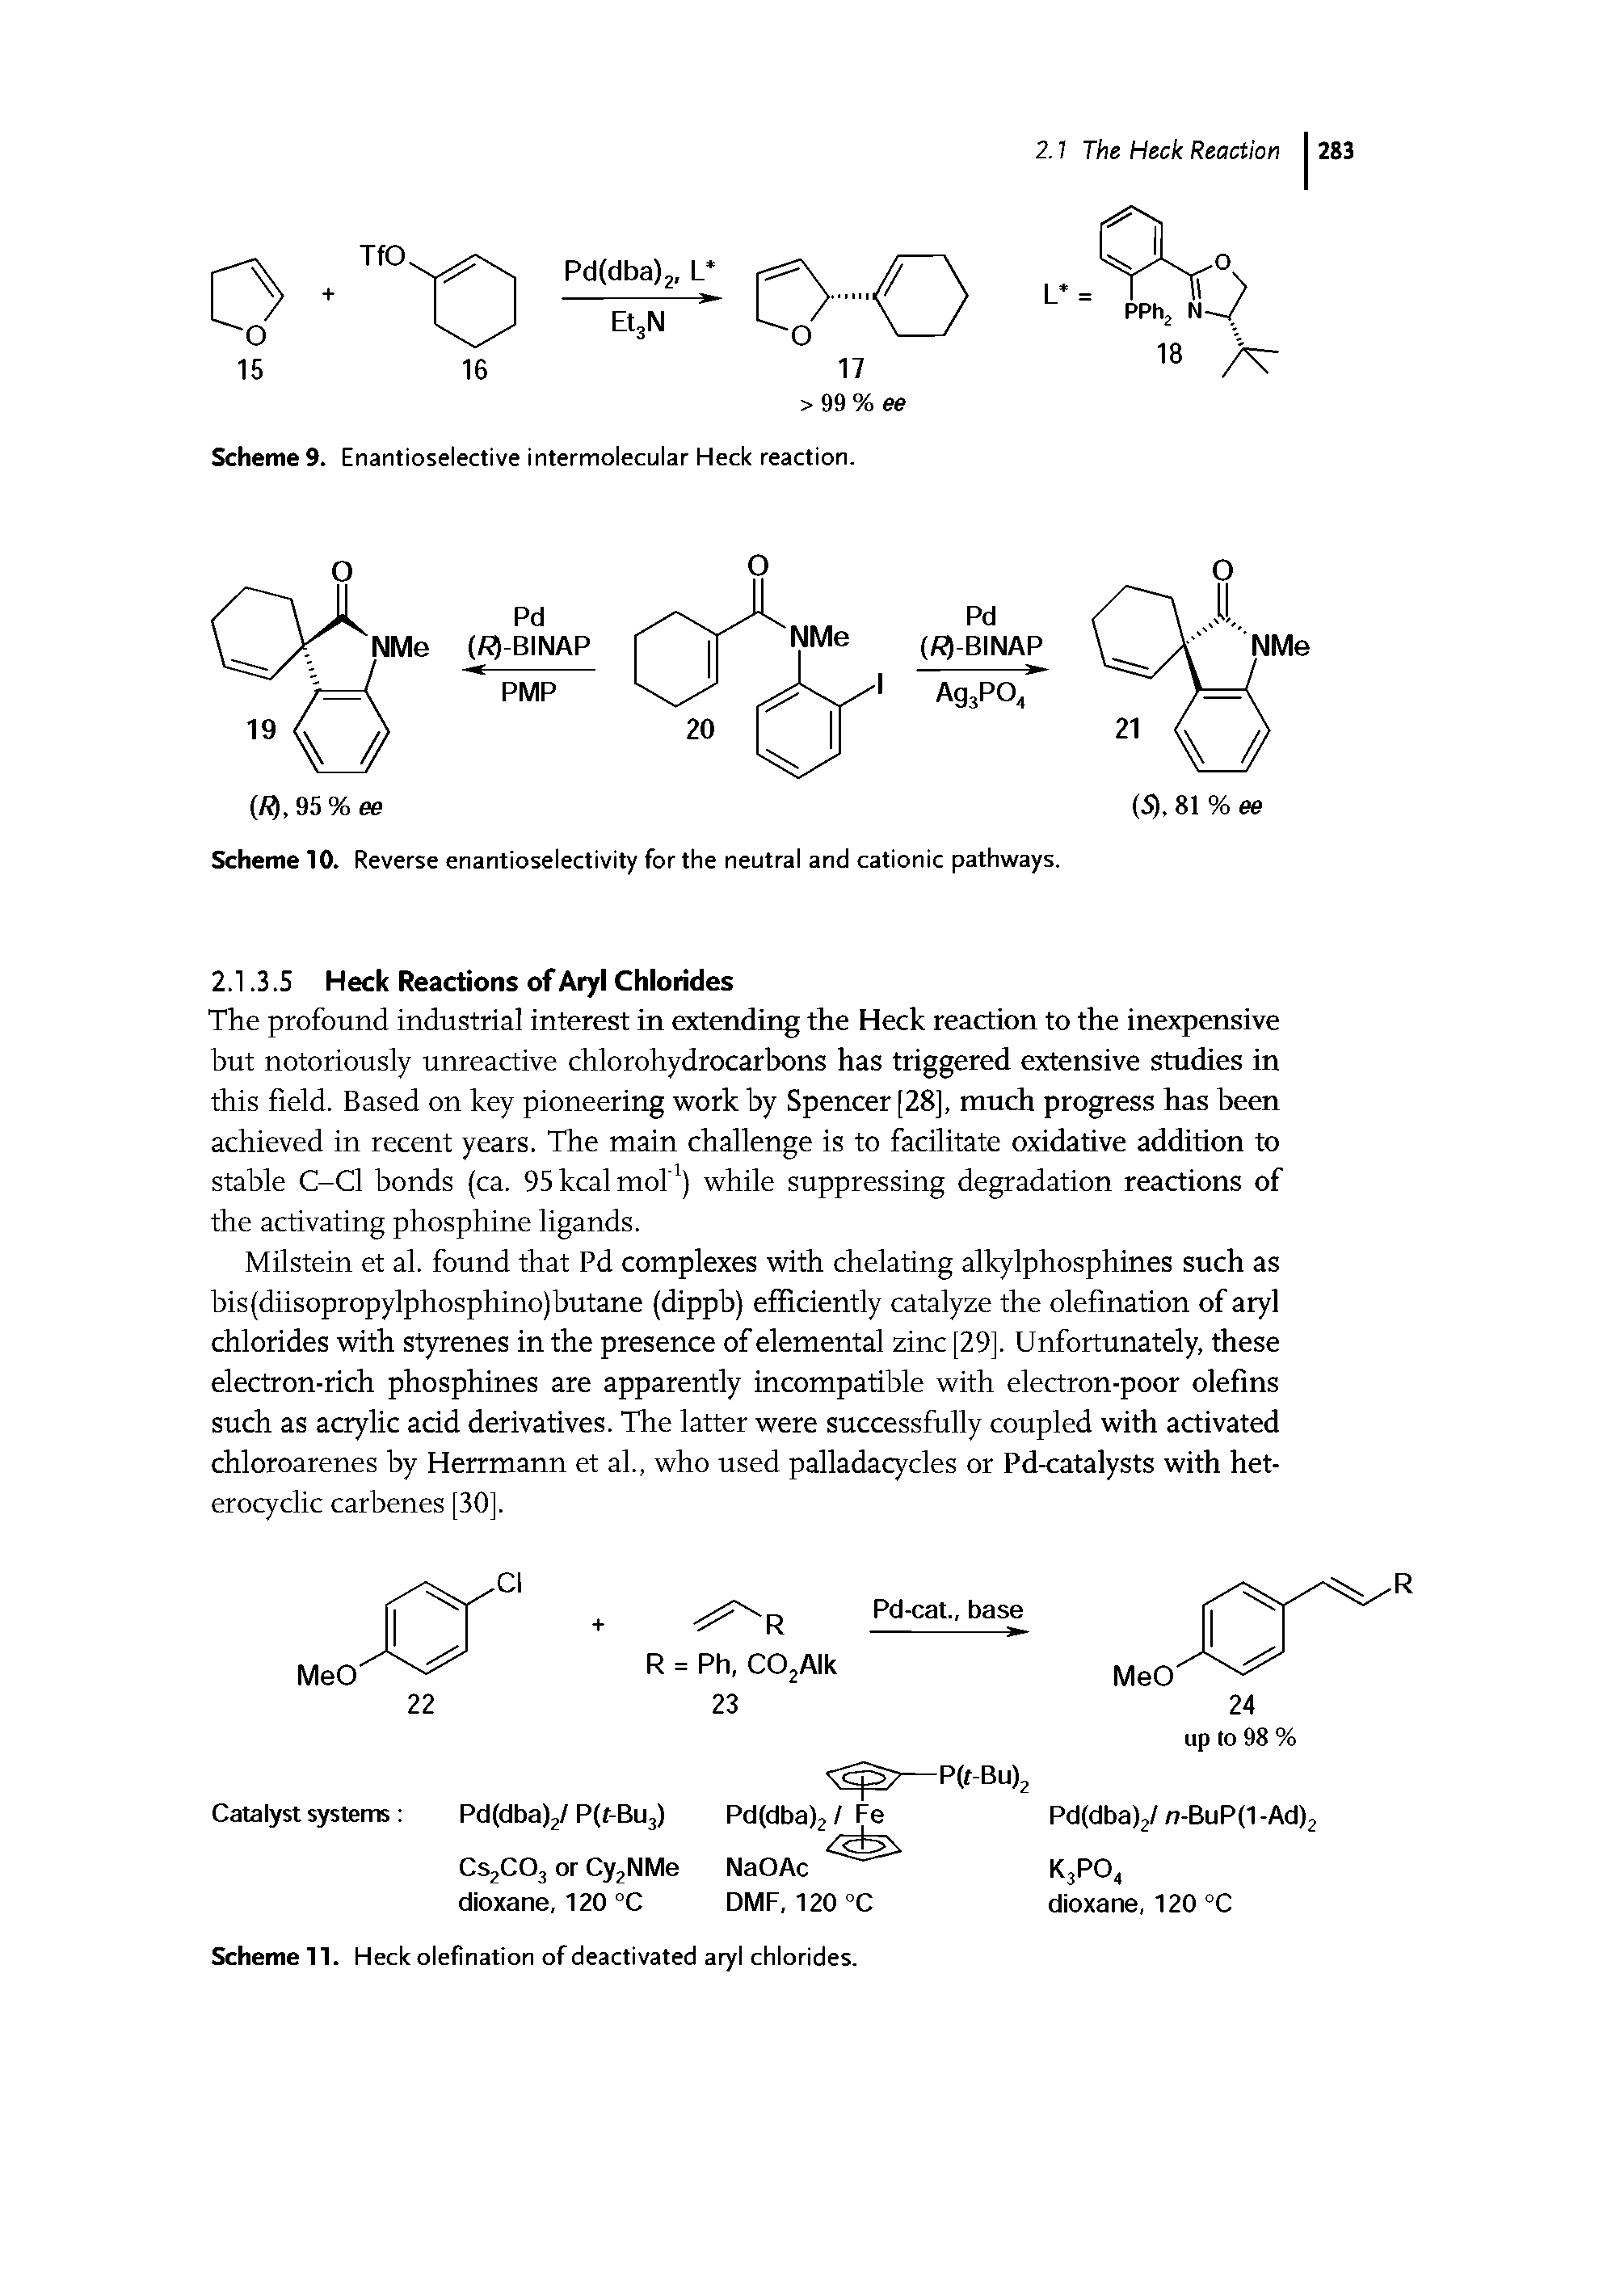 Scheme 11. Heck olefination of deactivated aryl chlorides.